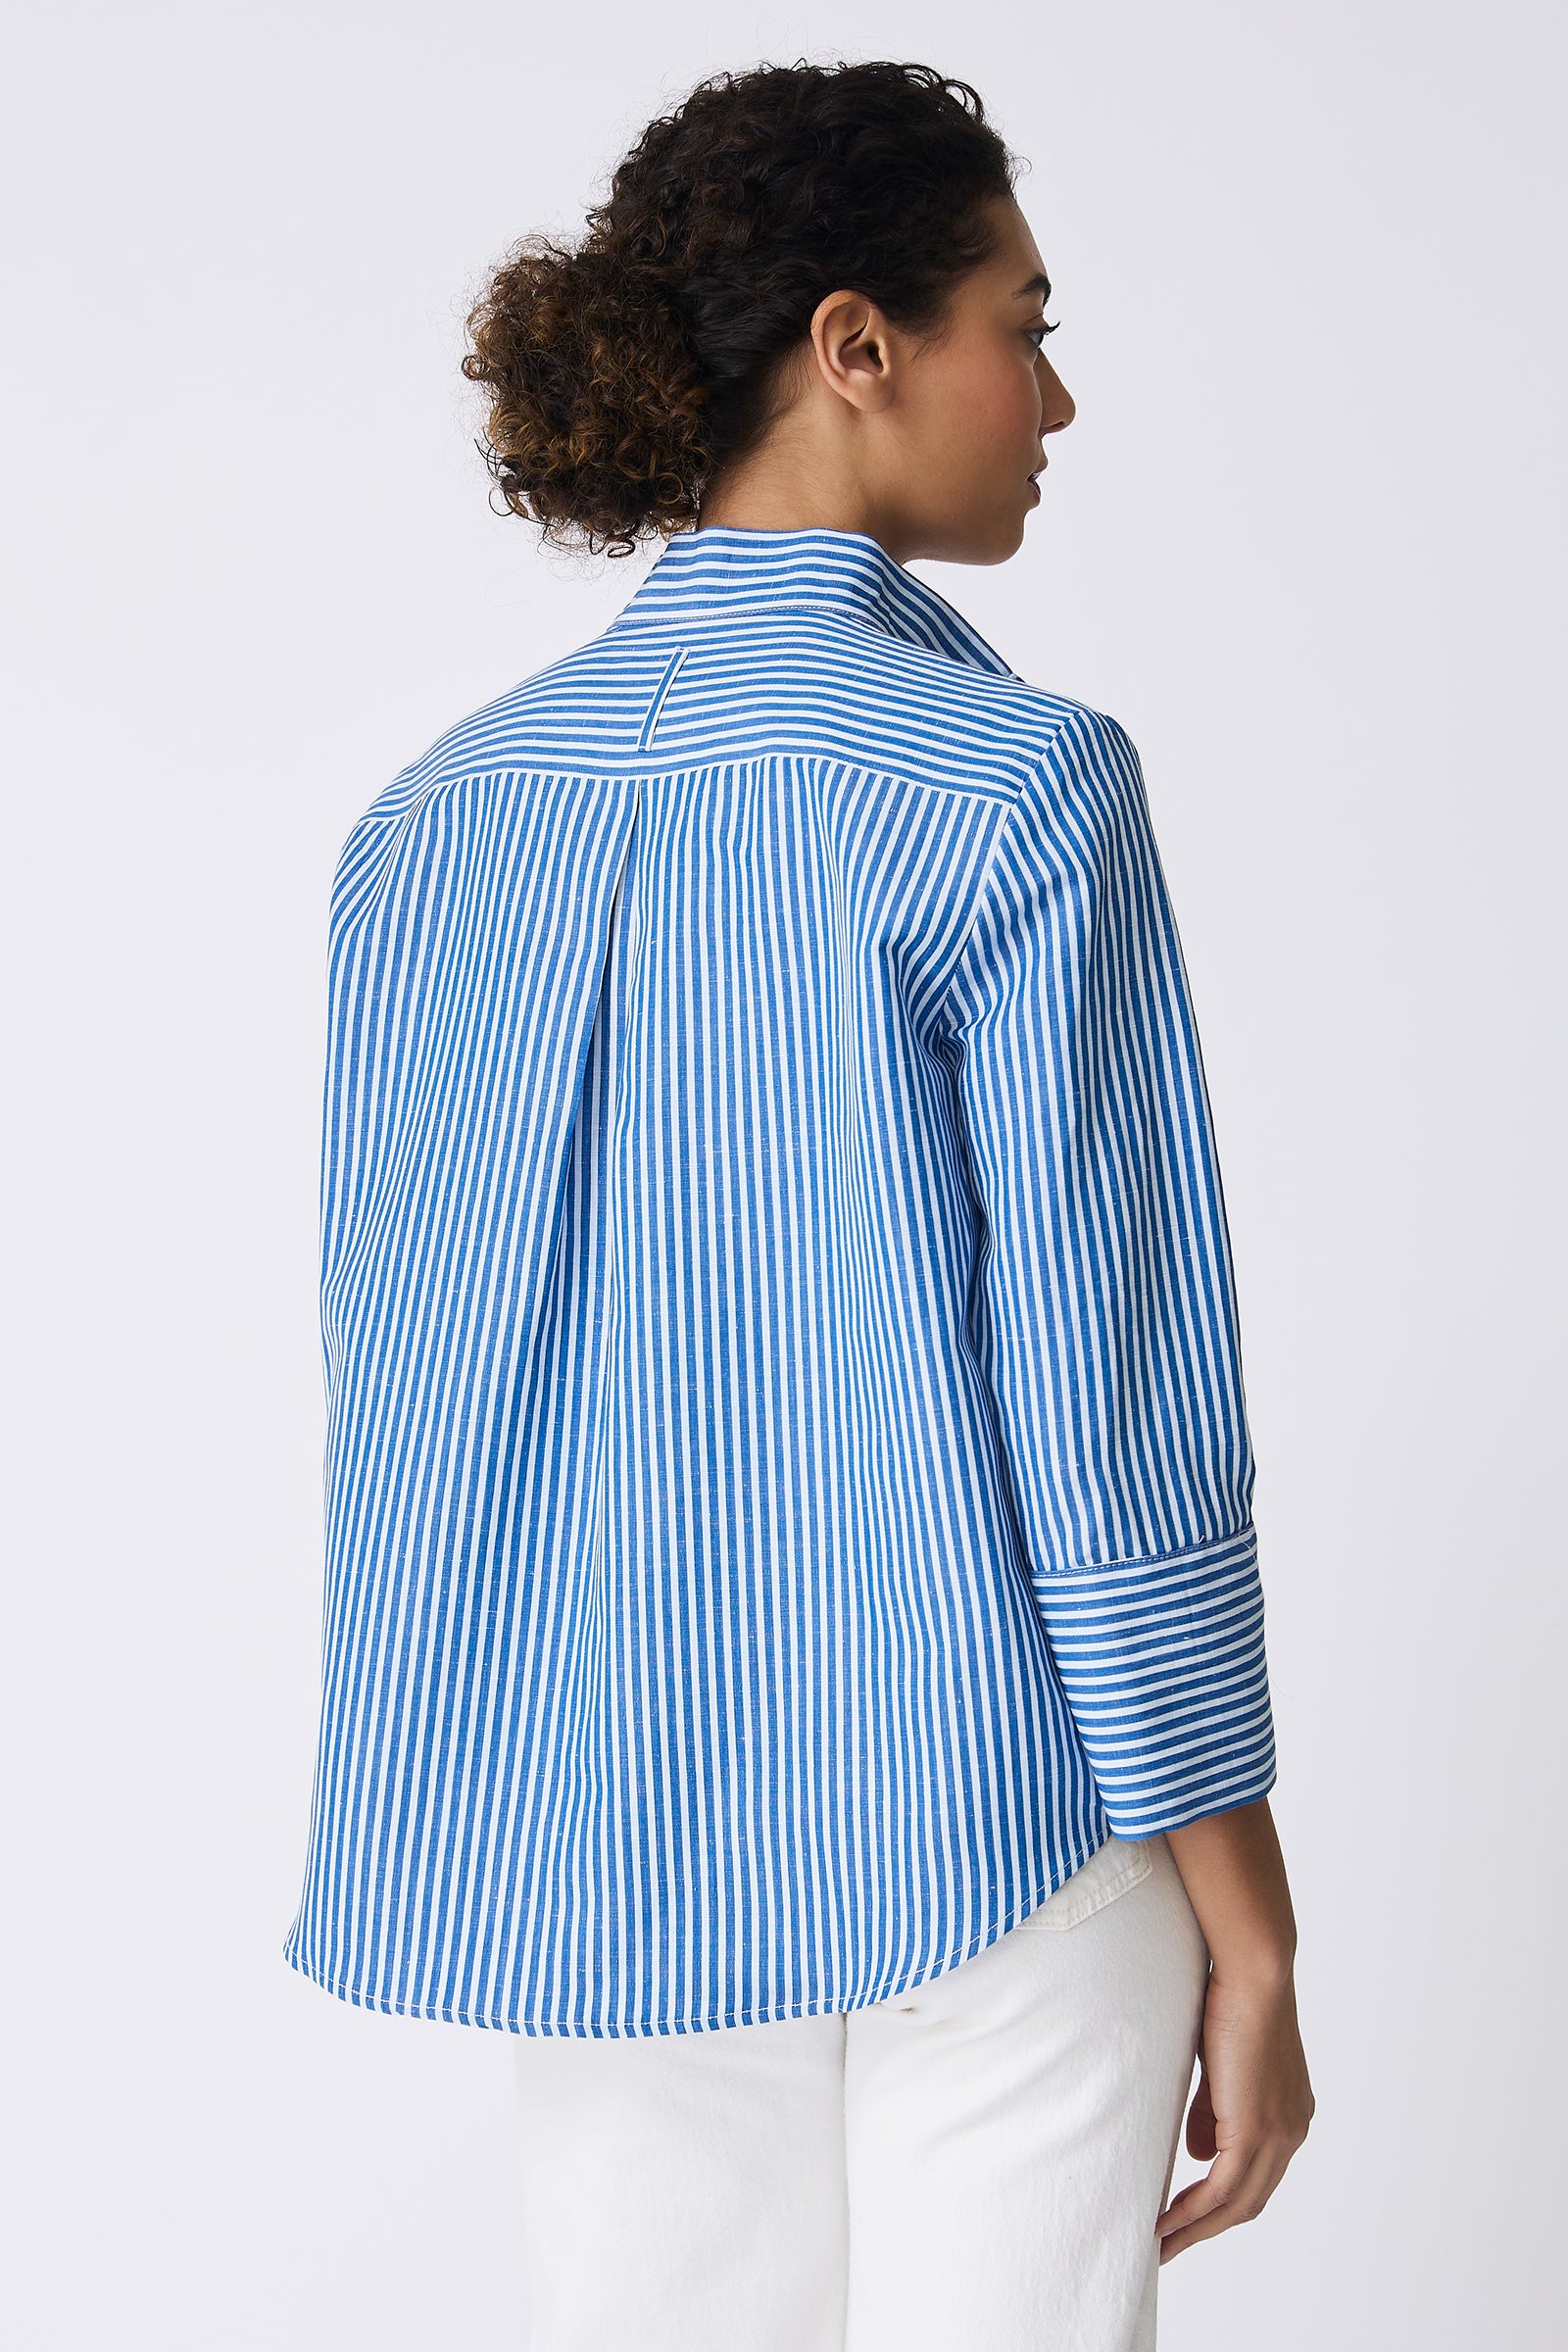 Kal Rieman Greta Placket Front Shirt in Cabana Stripe Blue on model back view